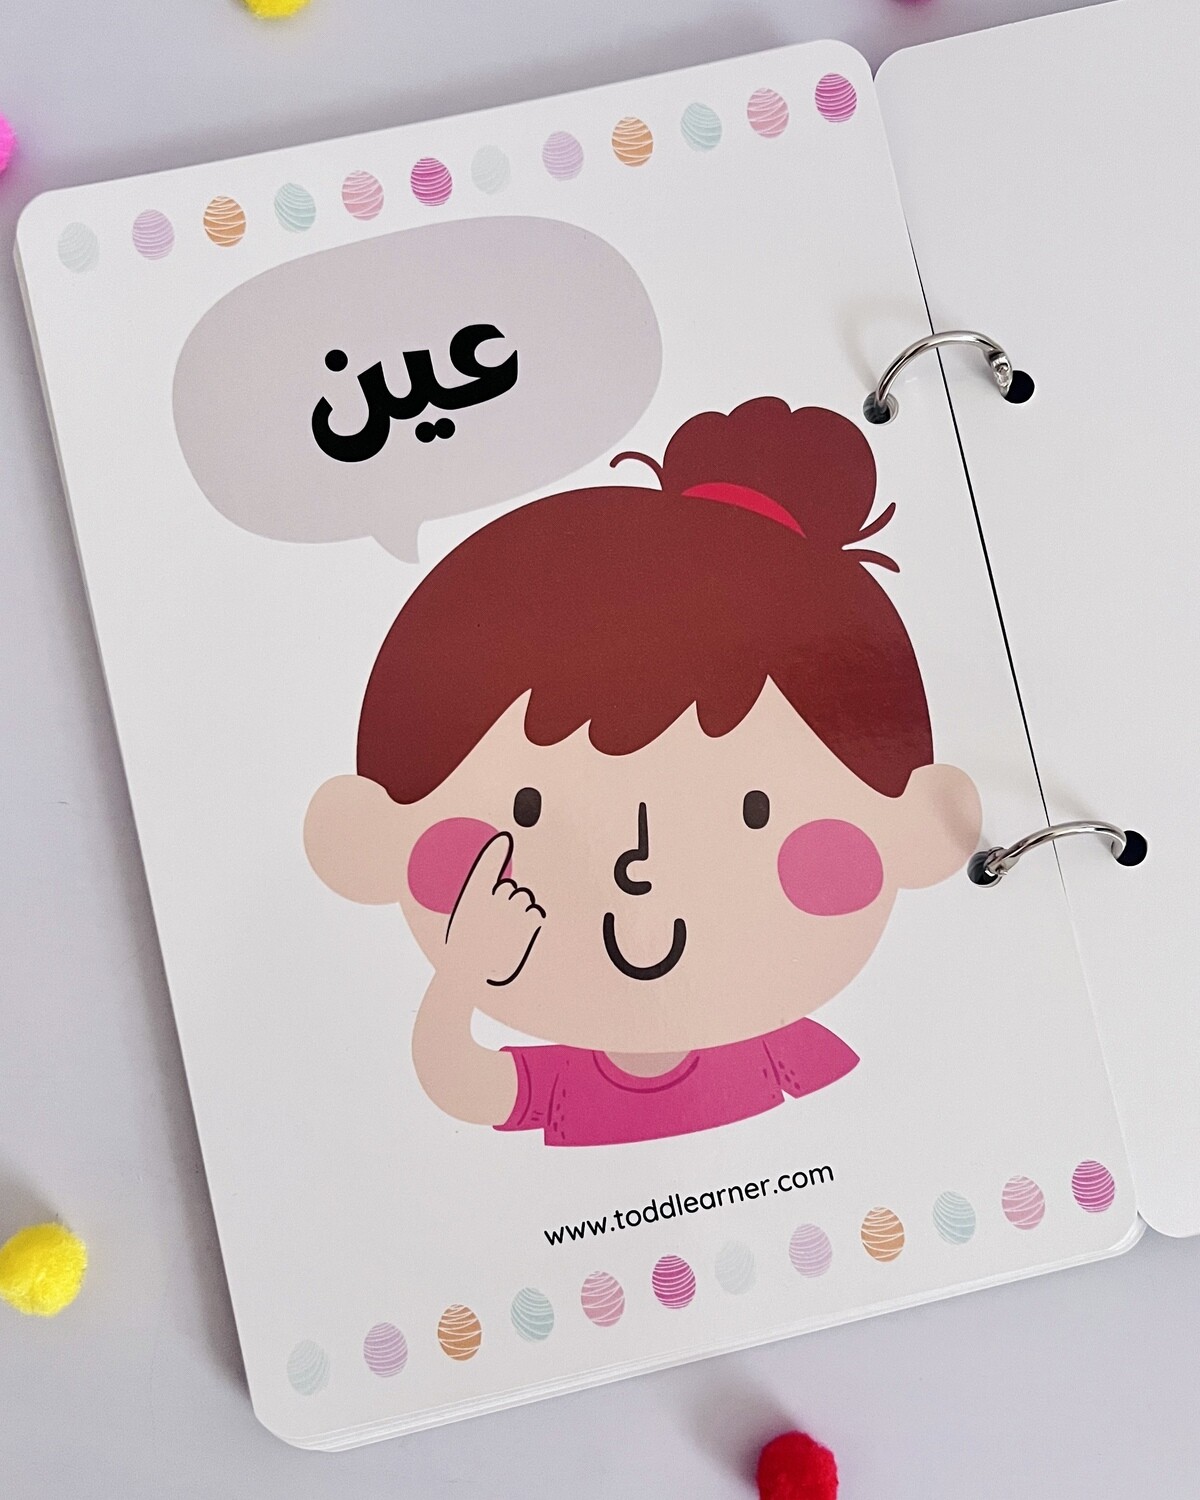 Arabic Body Parts Flash Cards for Kindergarten Kids.